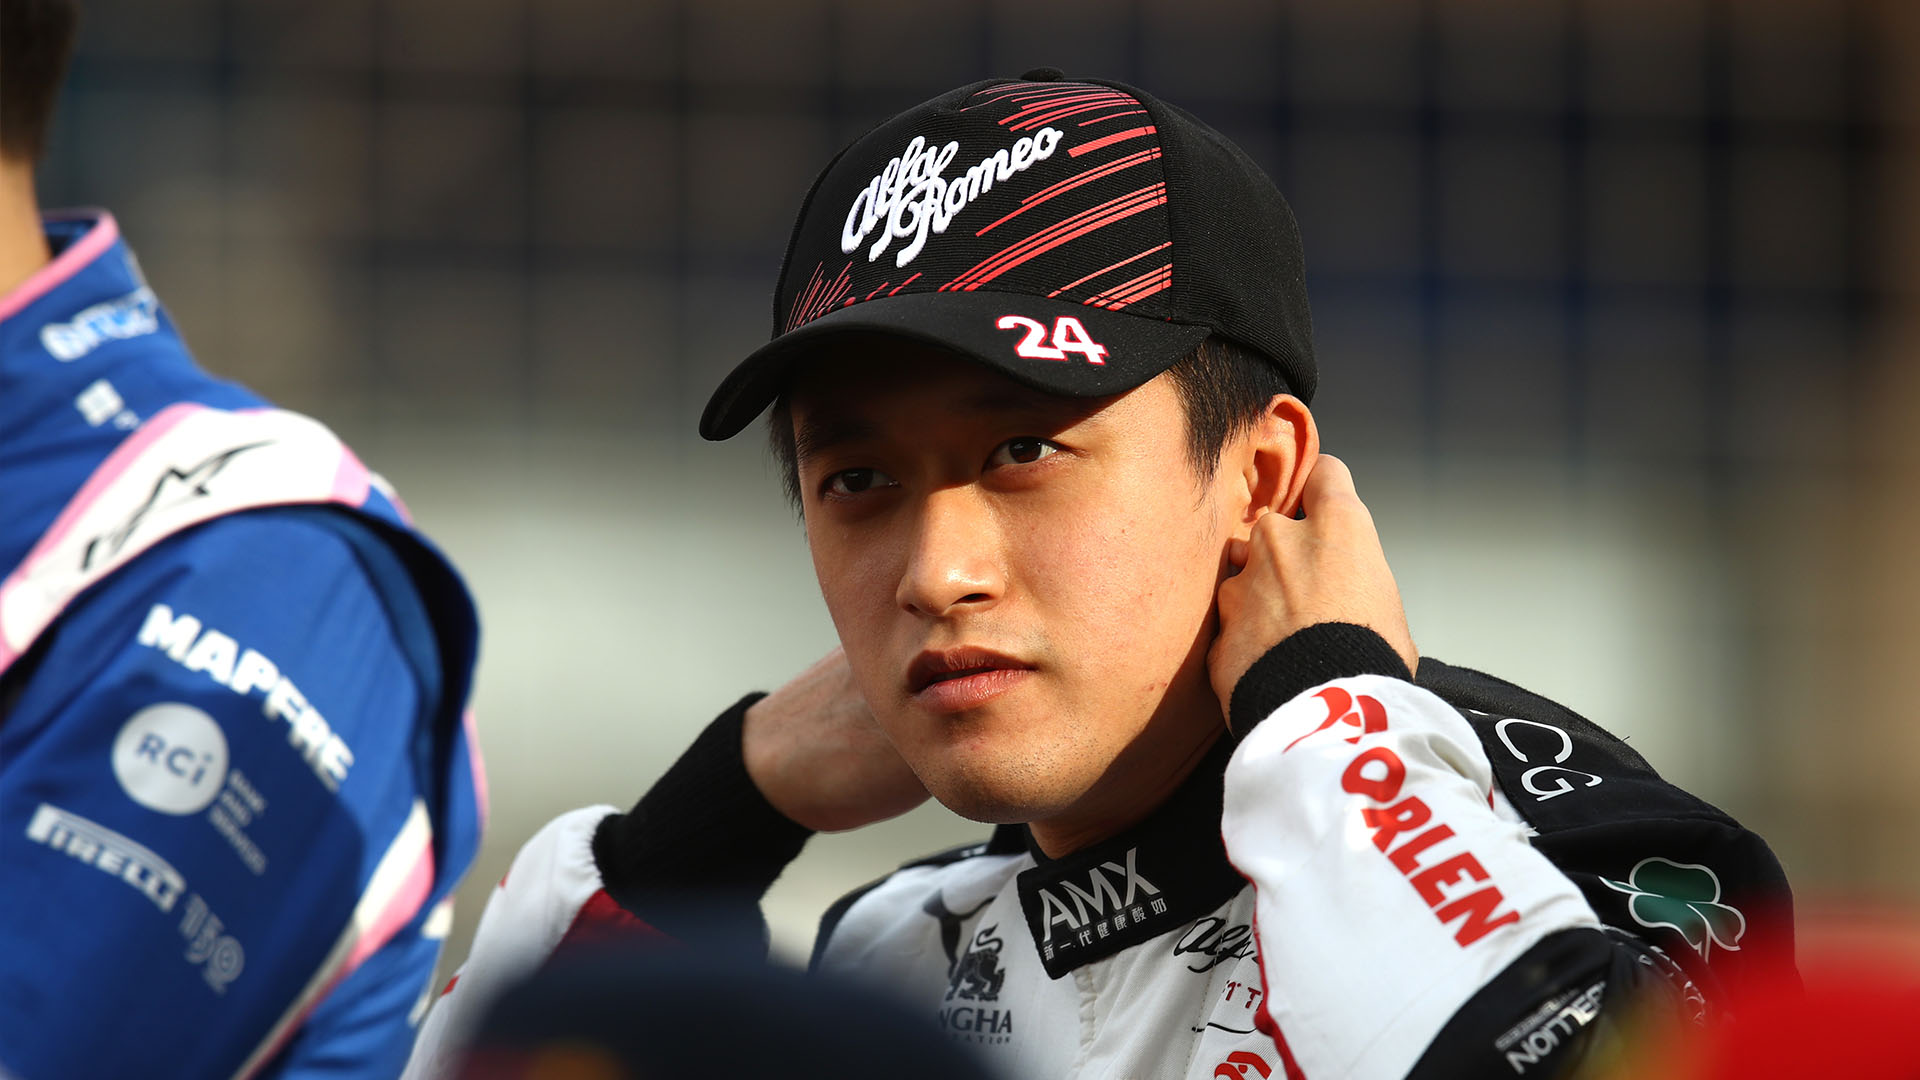 Zhou Guanyu, victima unui accident spectaculos la Silverstone, va